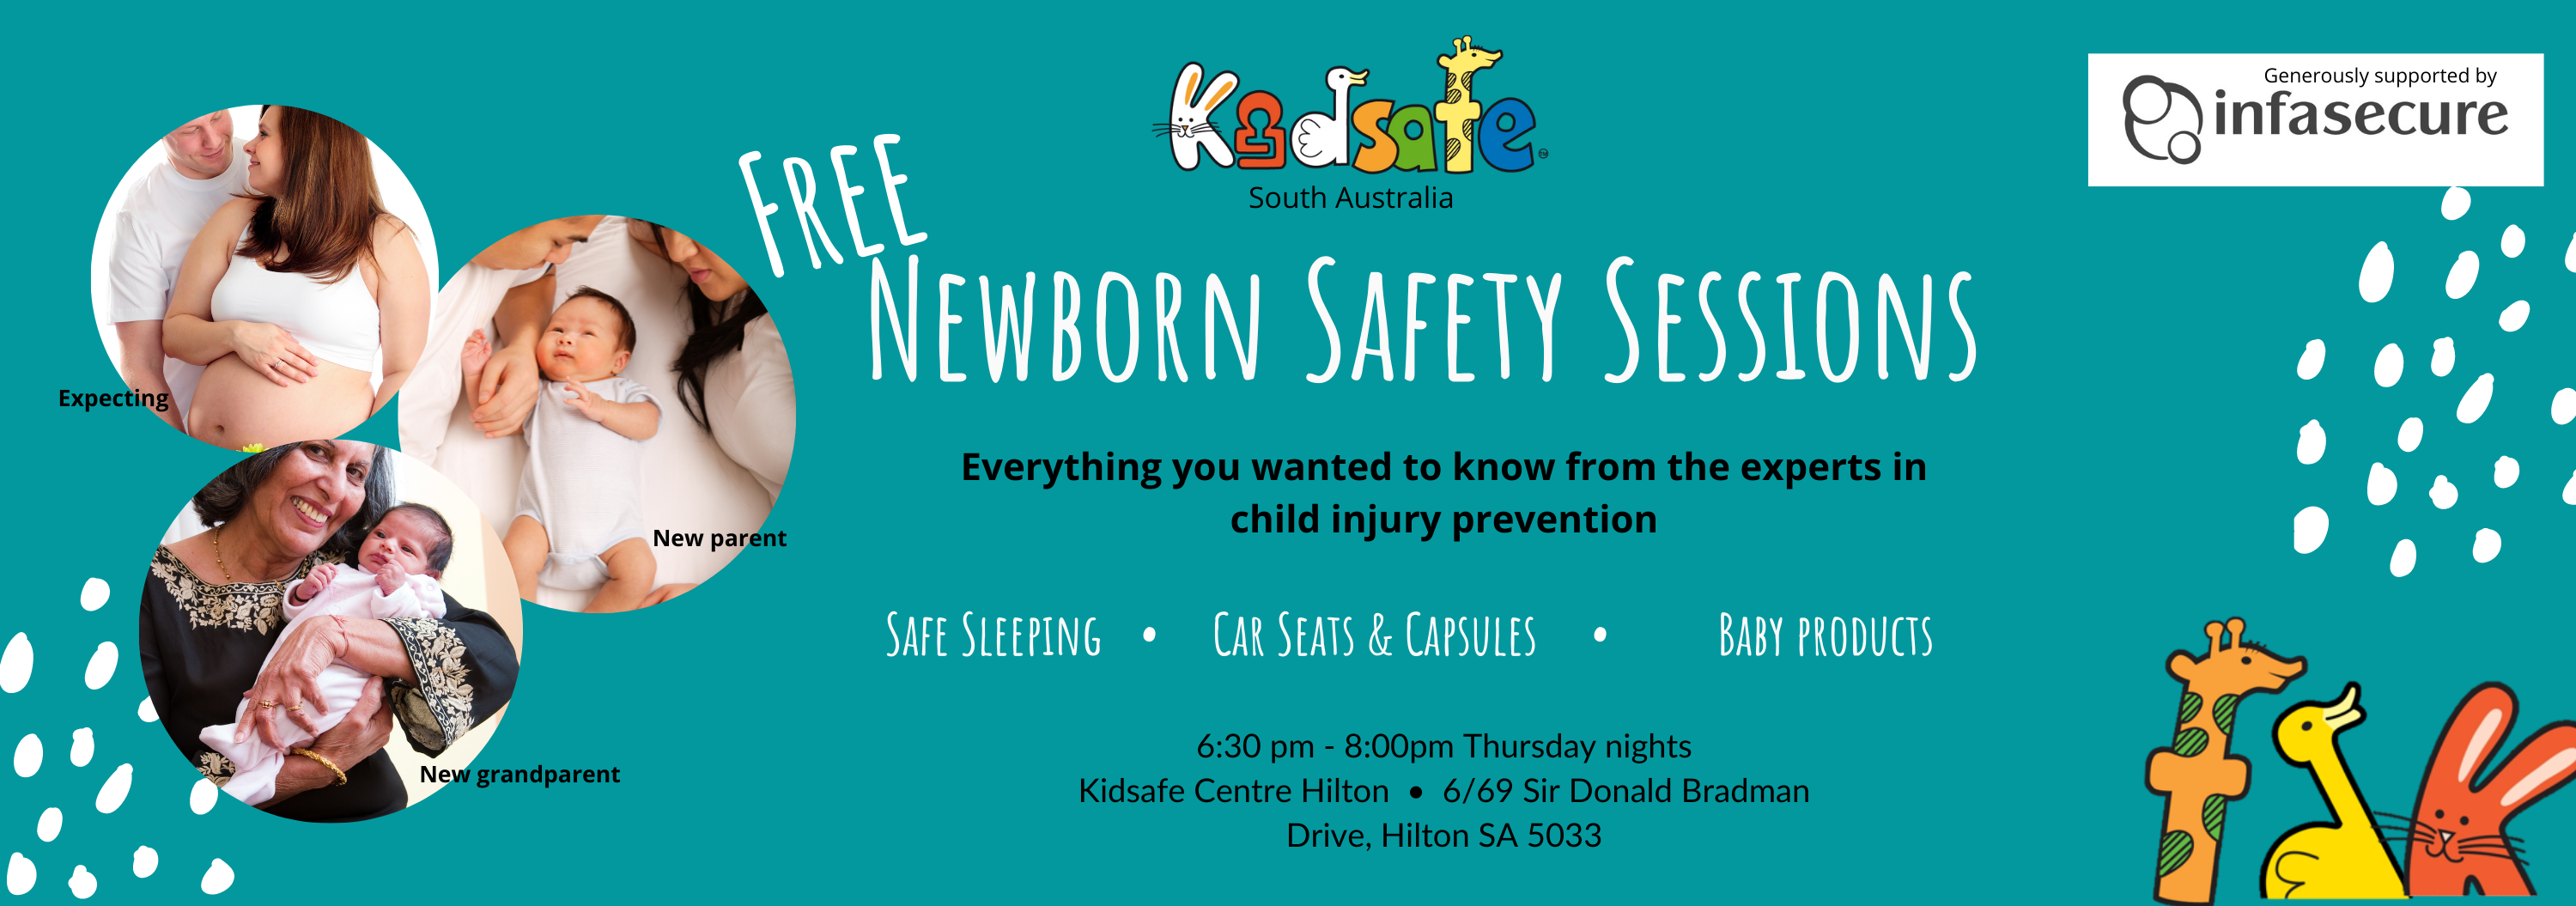 newborn safety sessions